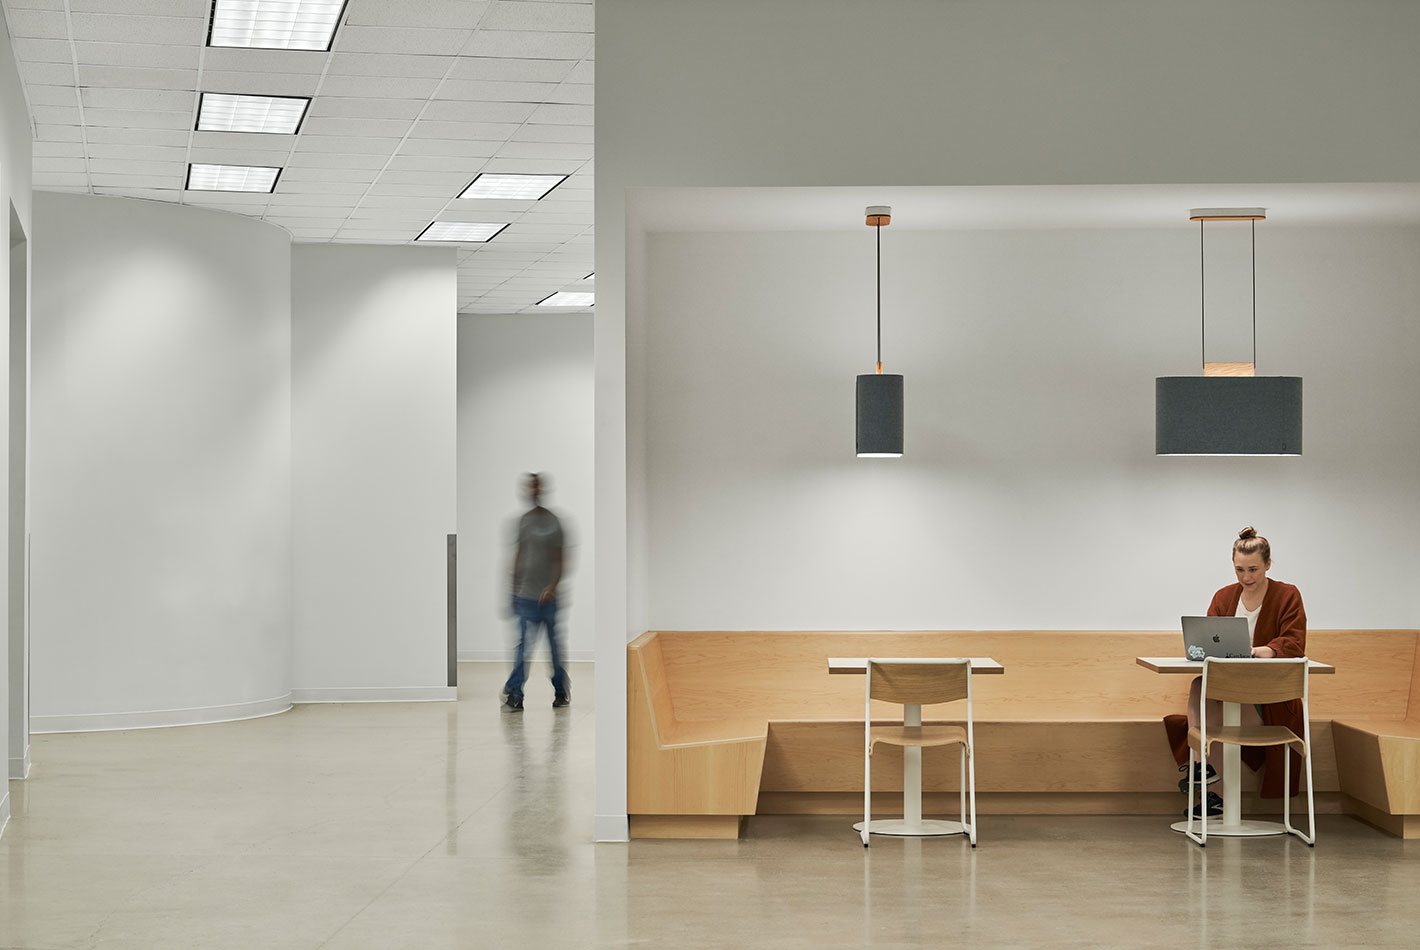 A wood-veneered corner banquette area in Postmates Headquarters. 2 overhead light fixtures illuminate the space.